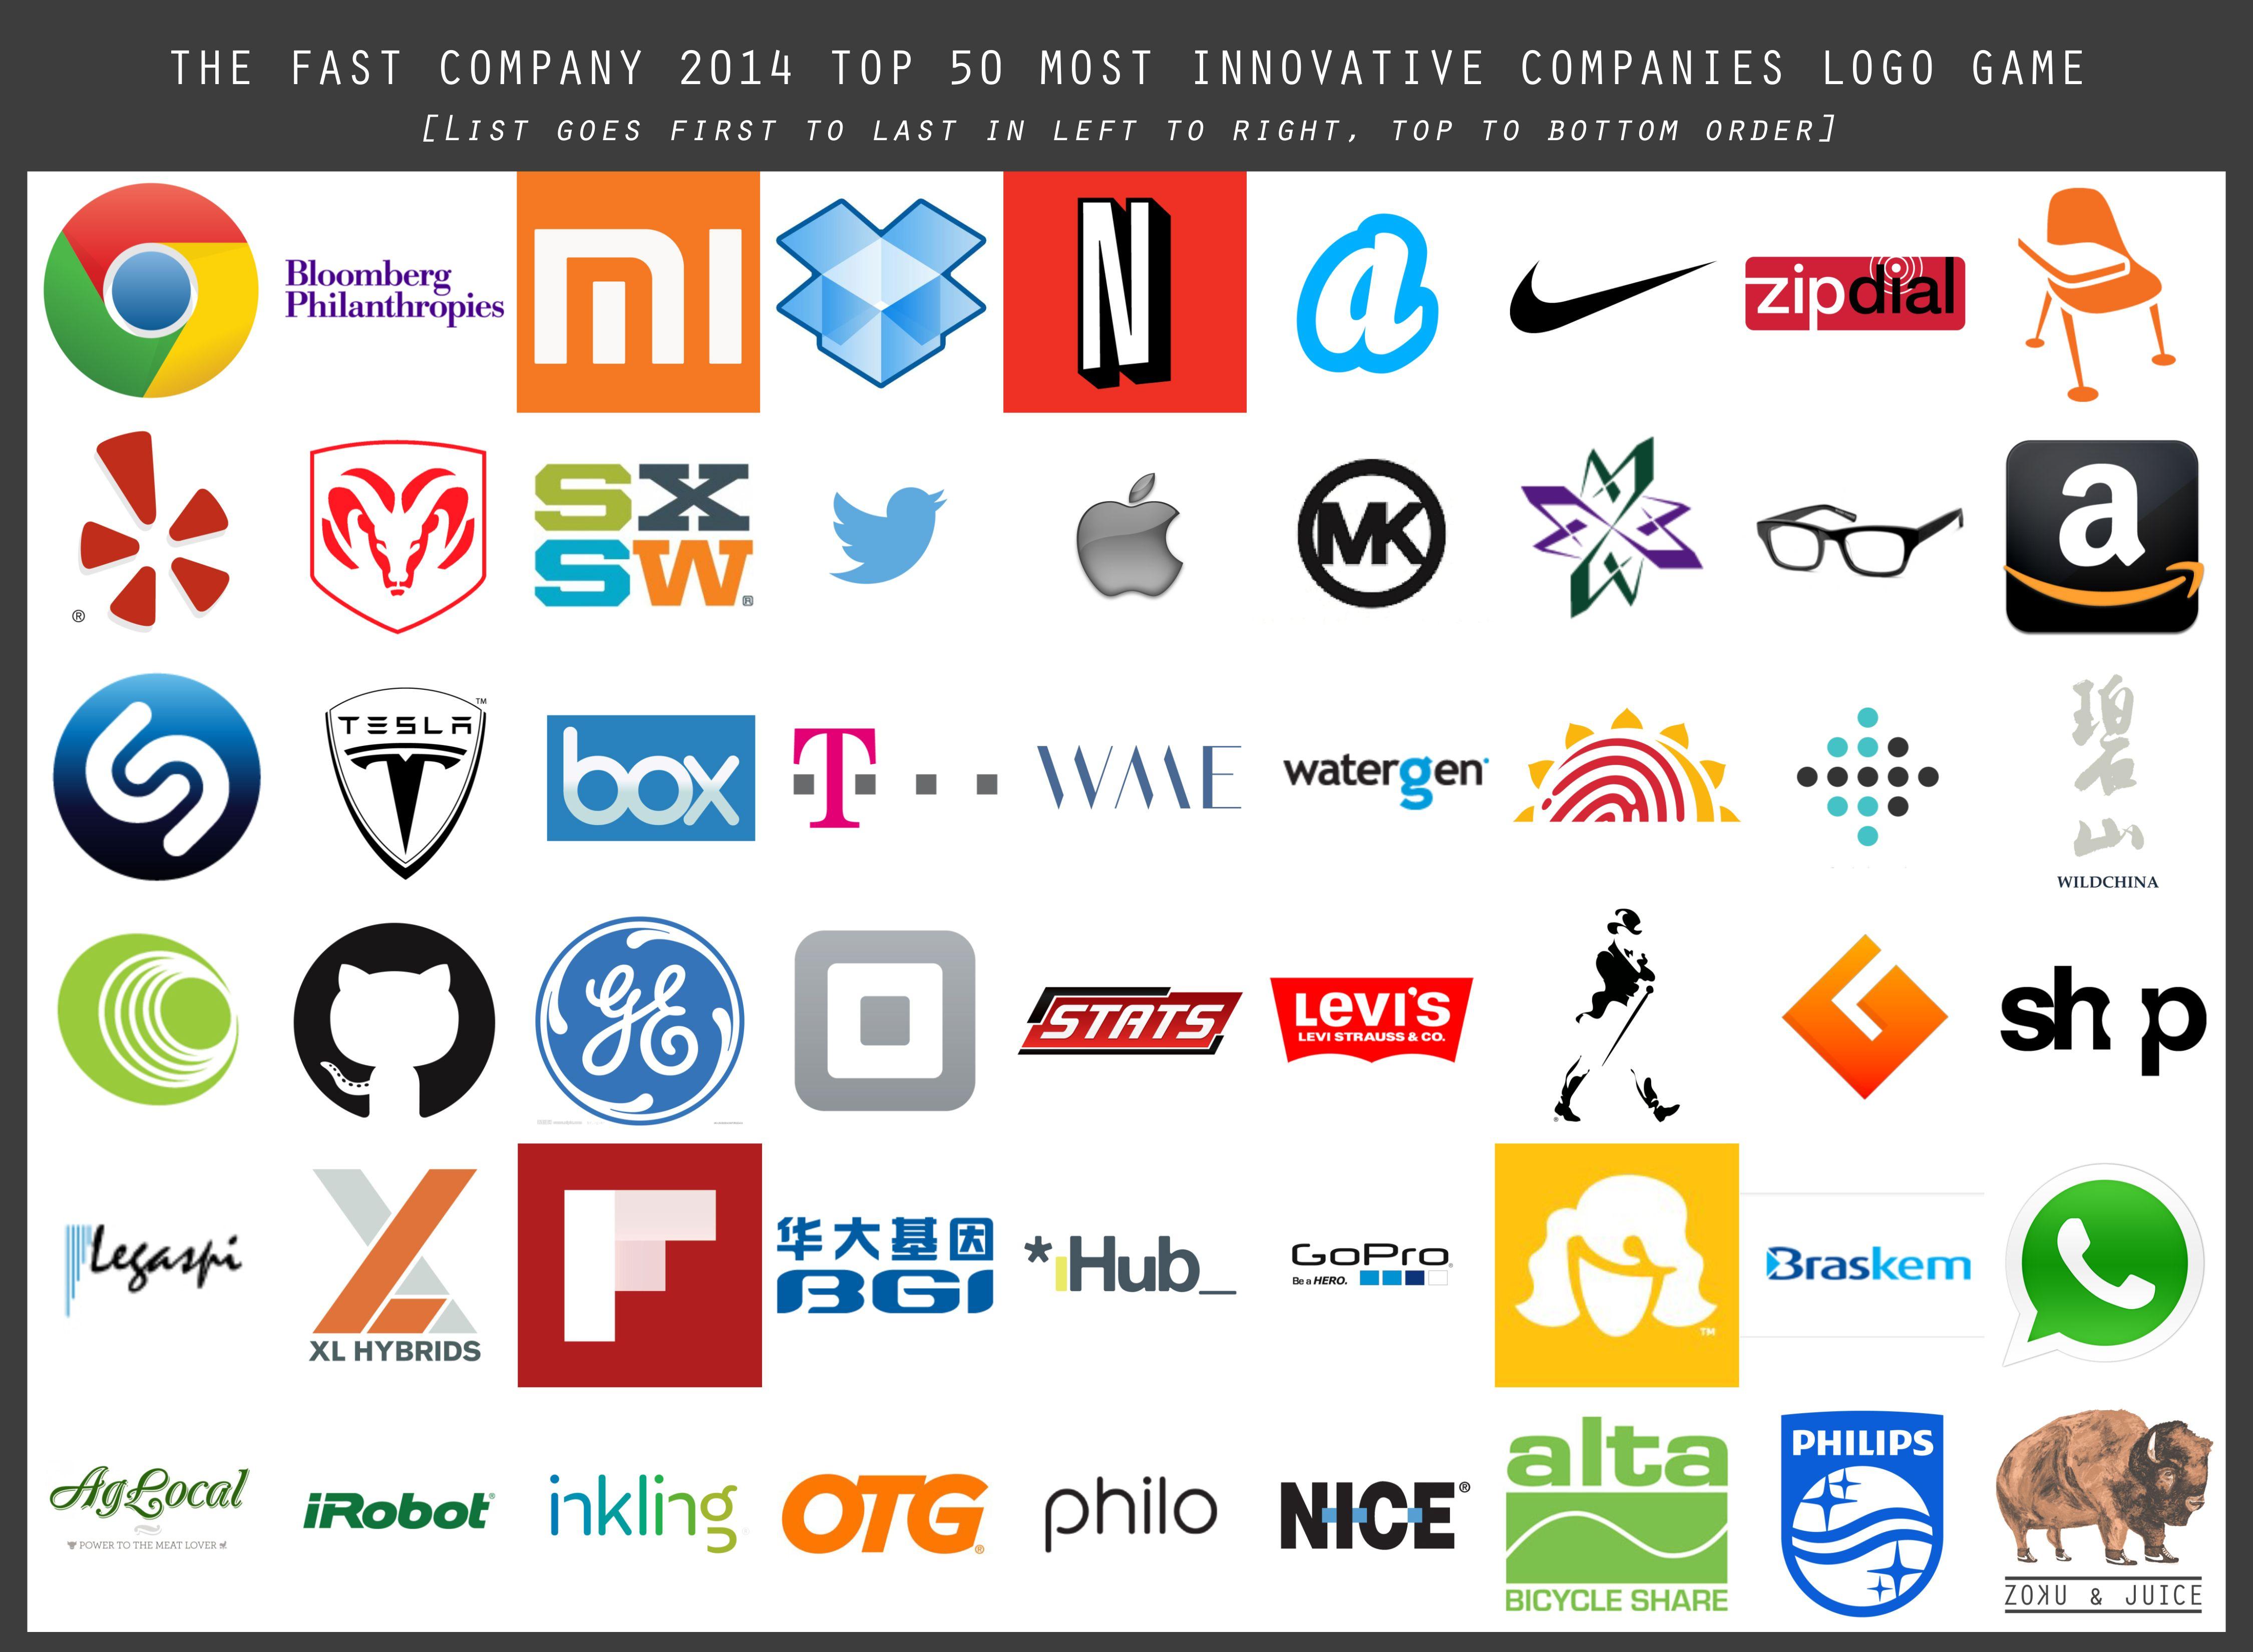 Top Phone Company Logo - The World's Top 50 Most Innovative Companies [Logo Game] | ZOKU & JUICE